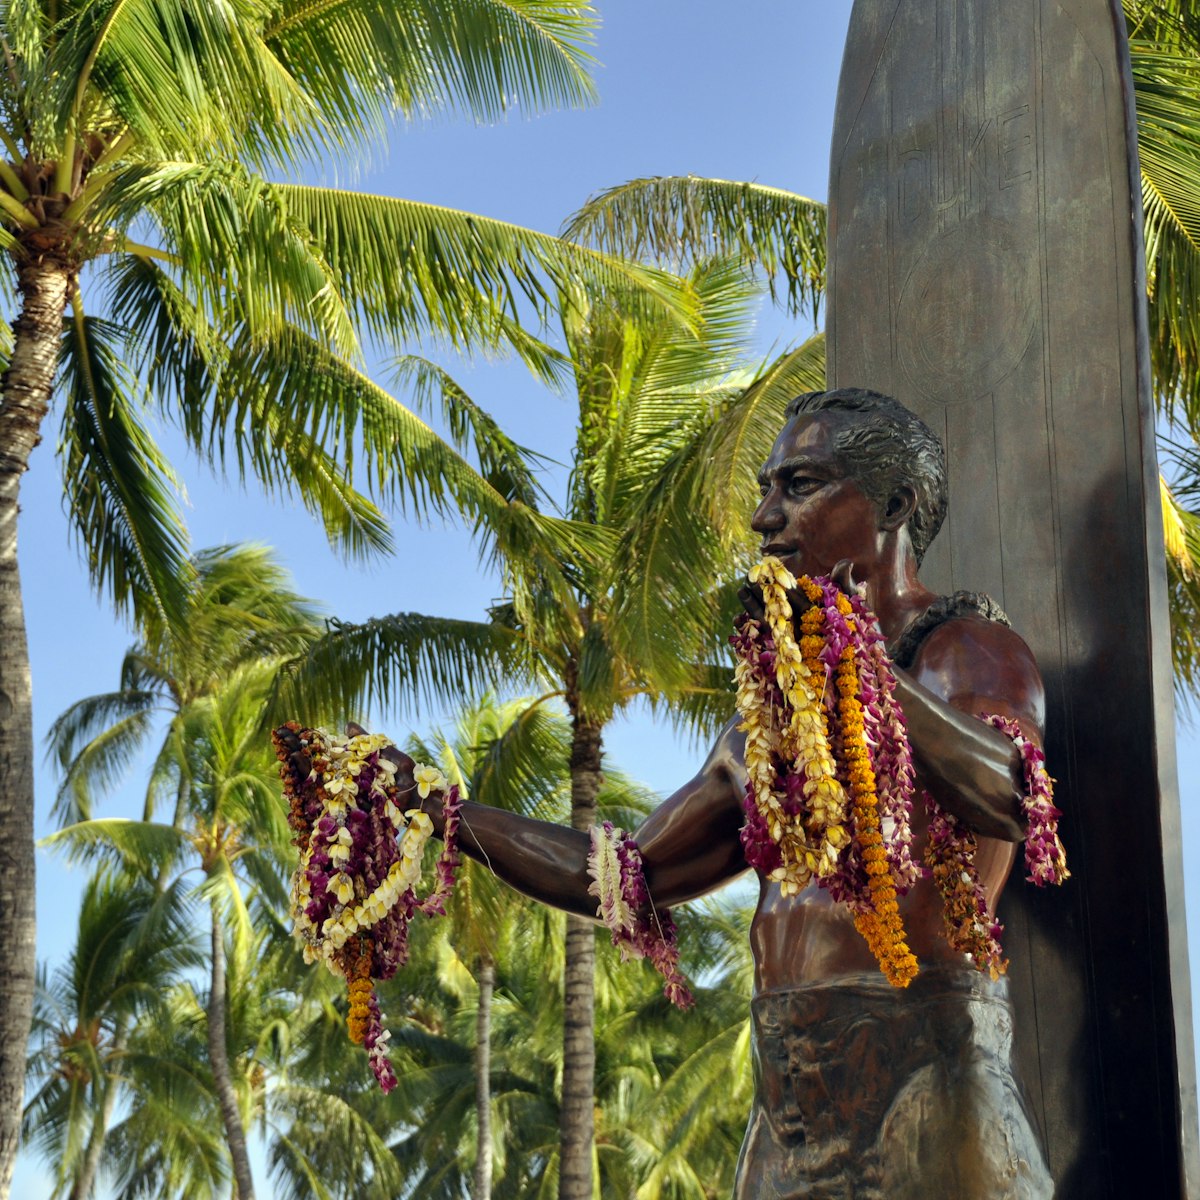 Duke Kahanamoku Statue in Waikiki Beach, Honolulu, Hawaii
